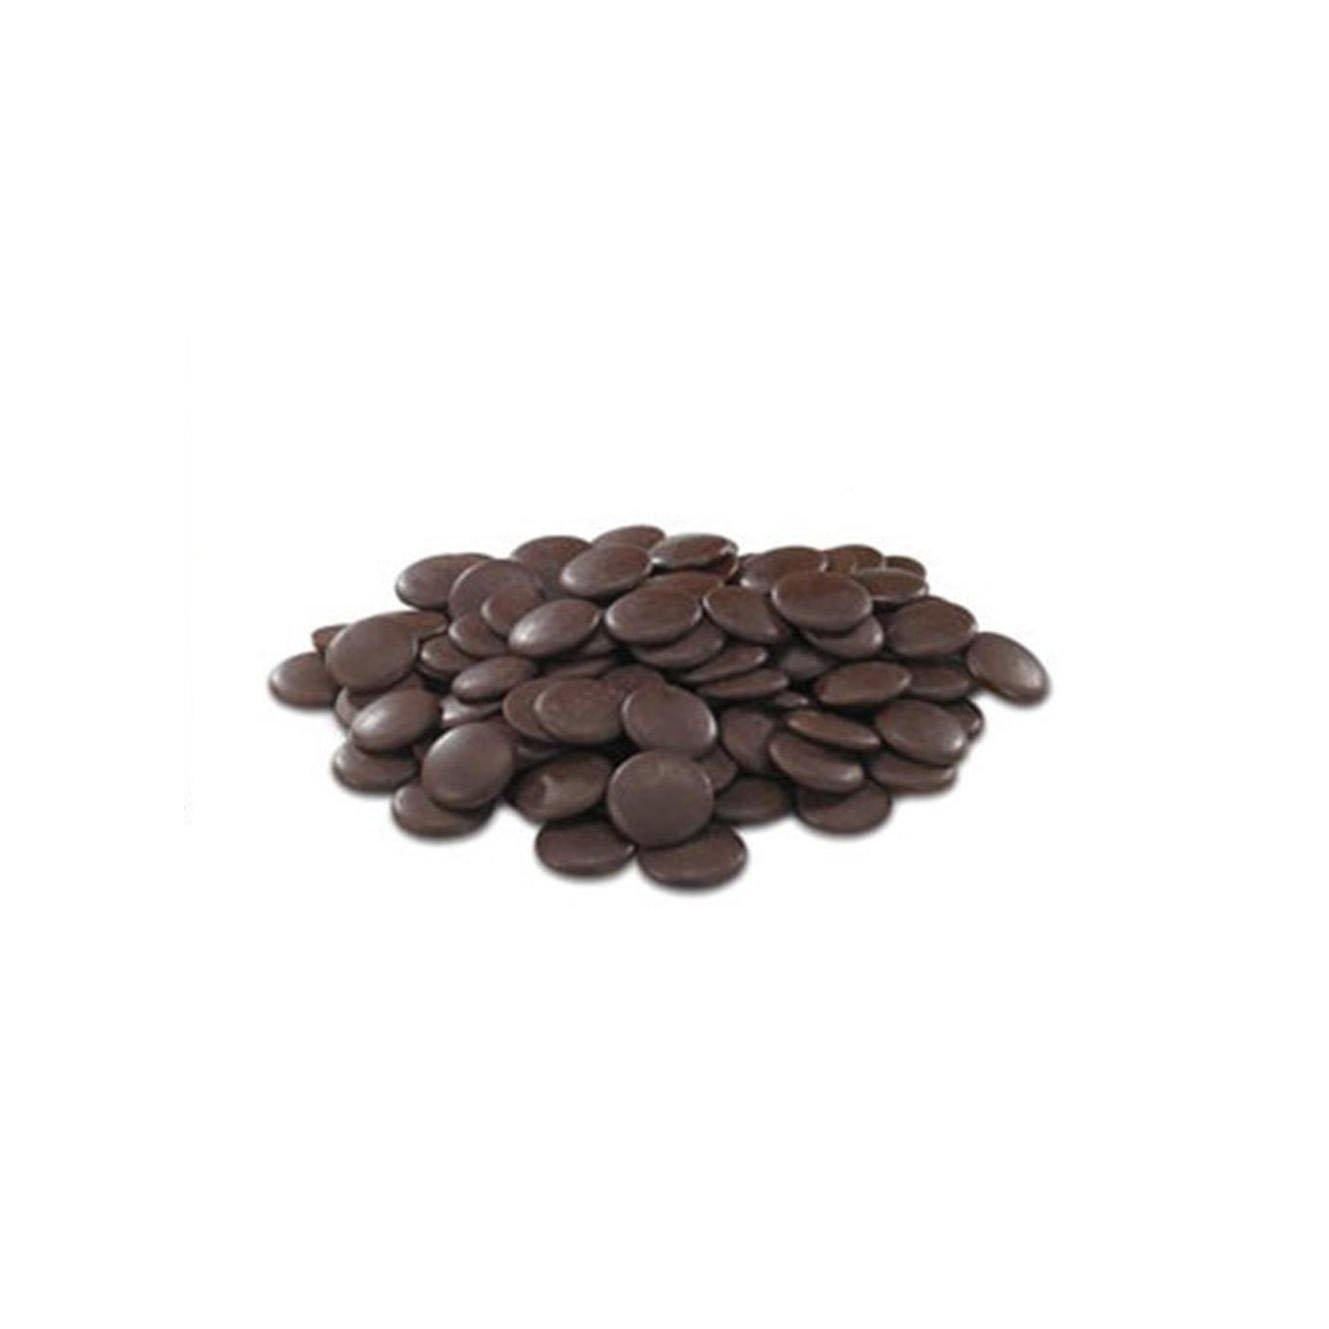 Buy Ask Foods Dark Chocolate Online - 500g